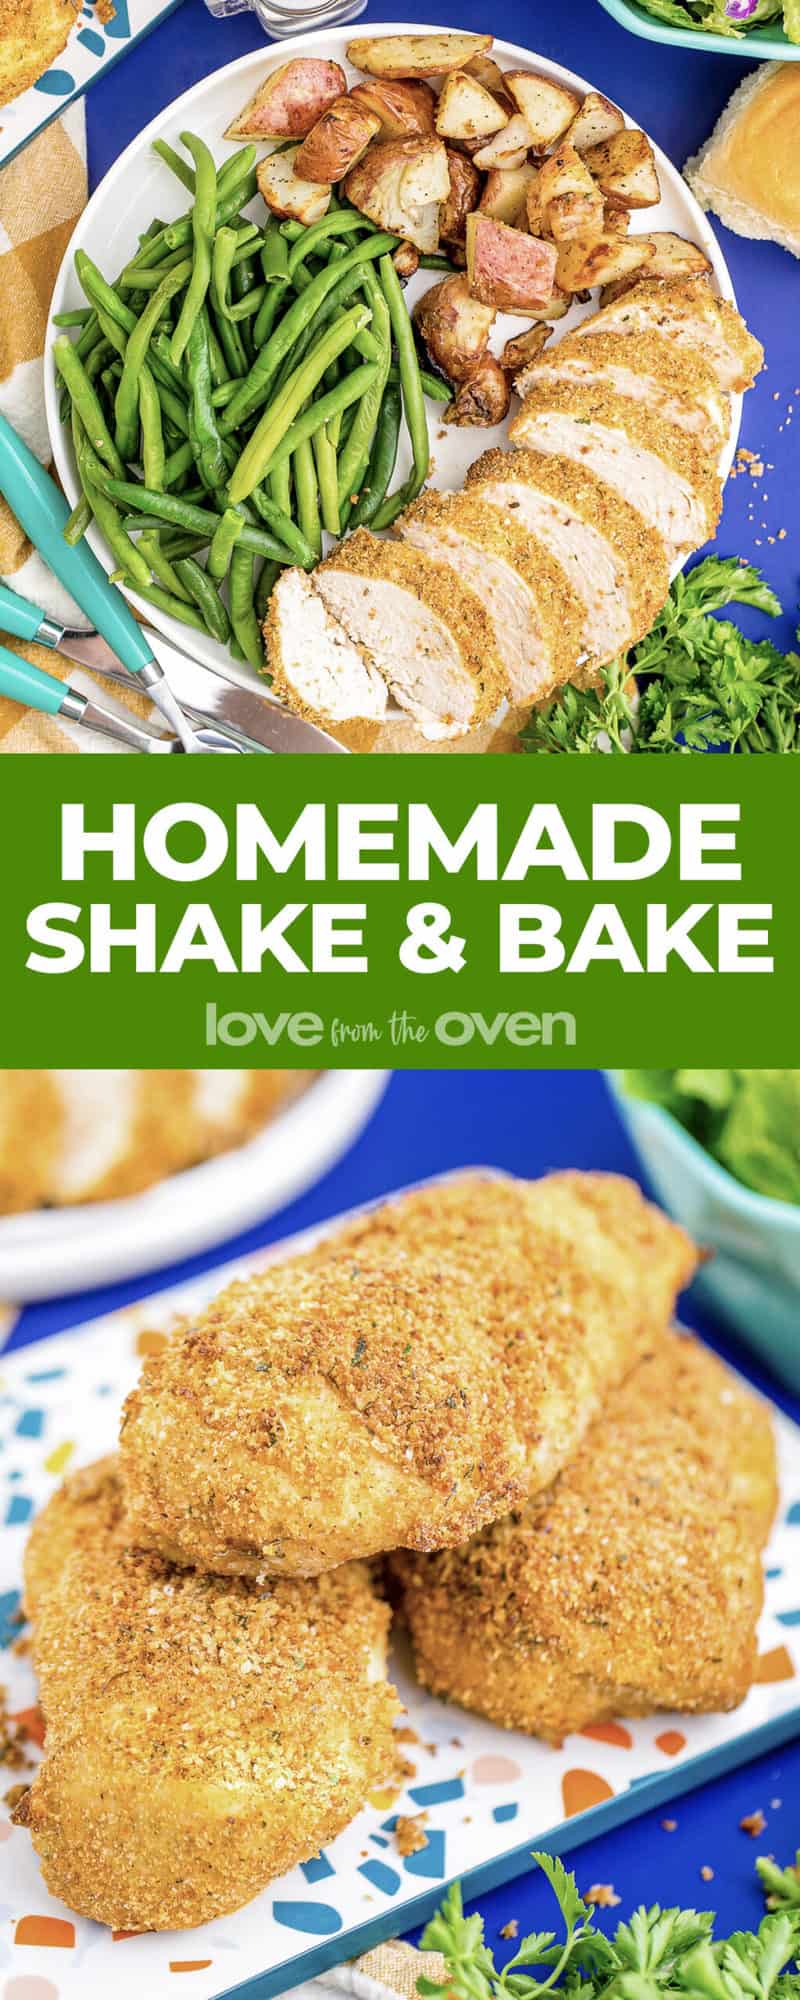 https://www.lovefromtheoven.com/wp-content/uploads/2022/03/homemade-shake-and-bake-recipe-scaled.jpg